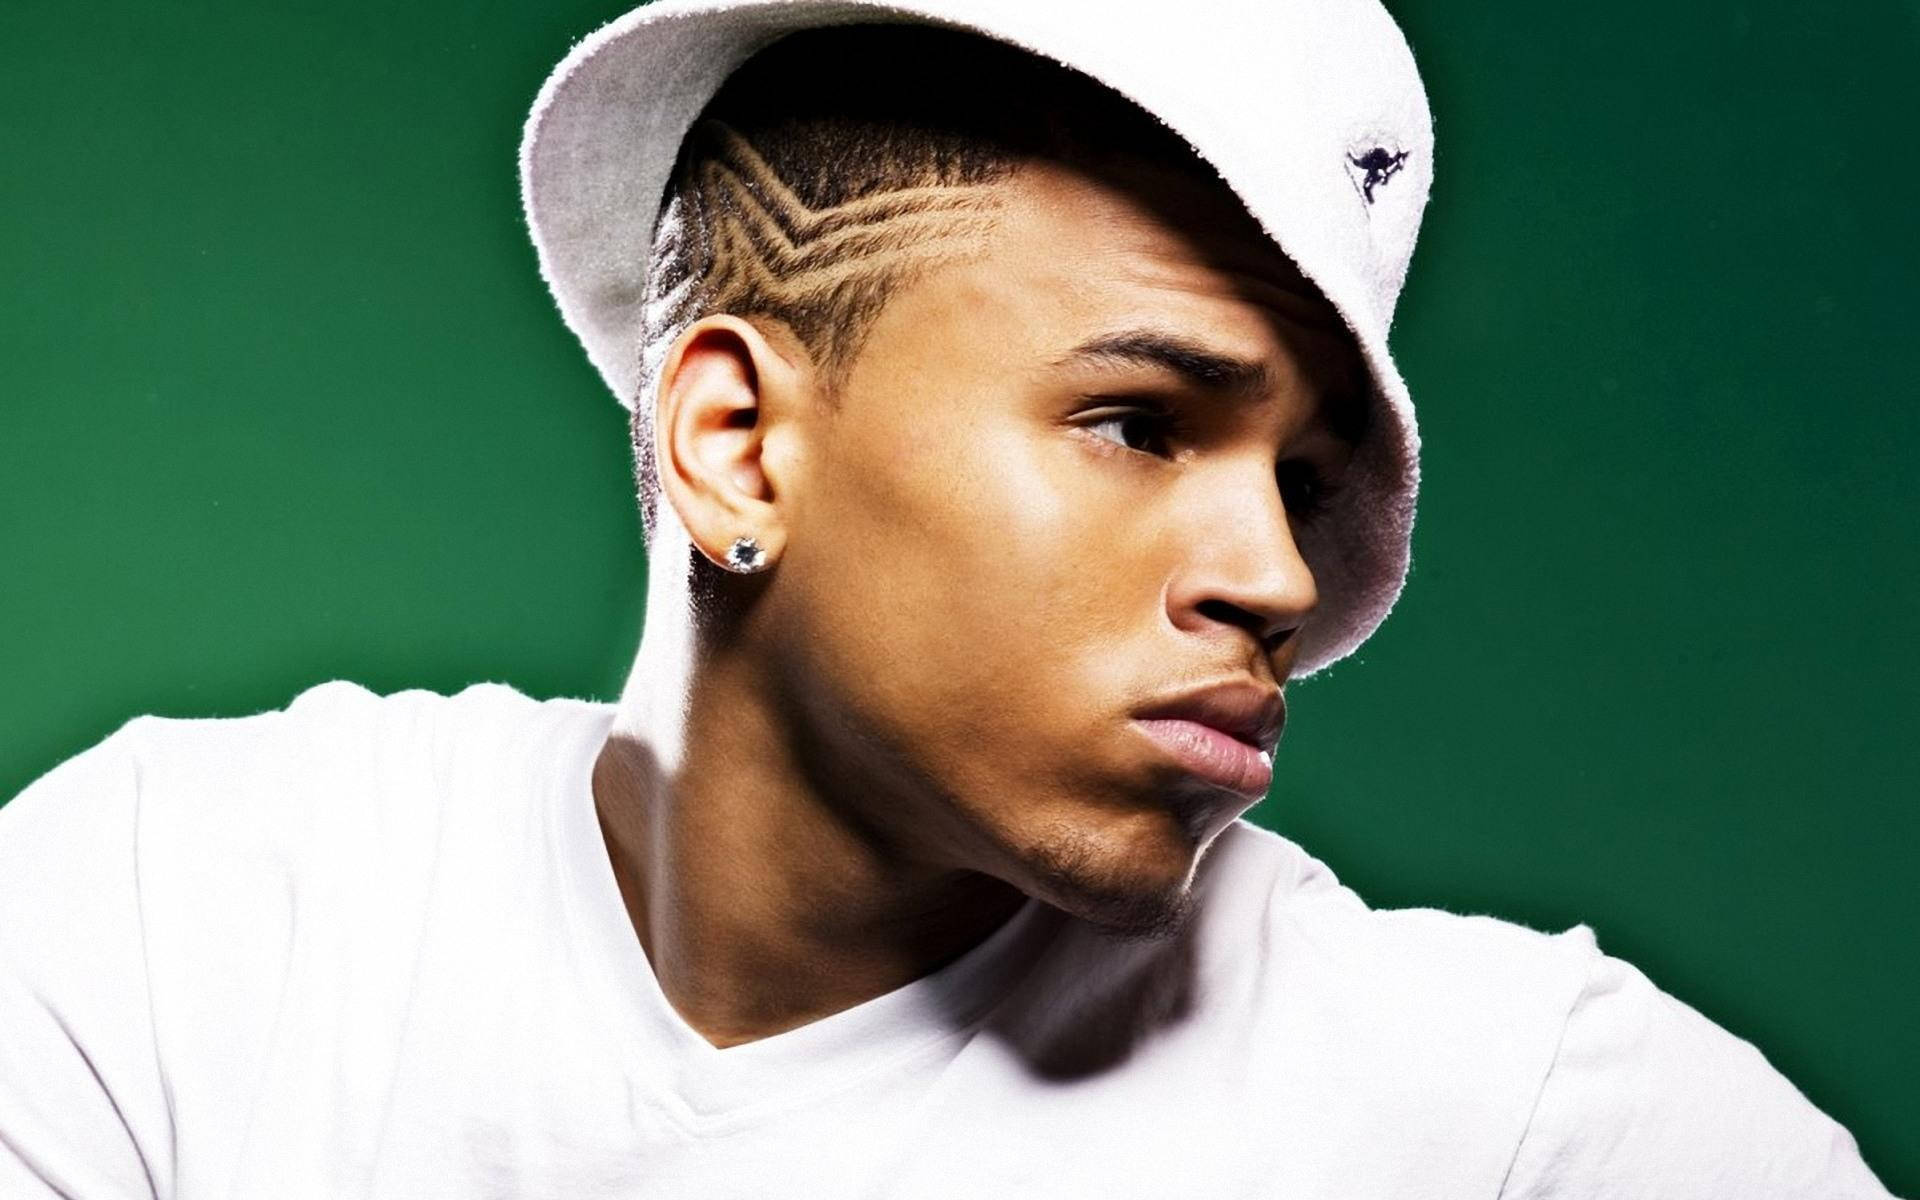 Chris Brown In Green